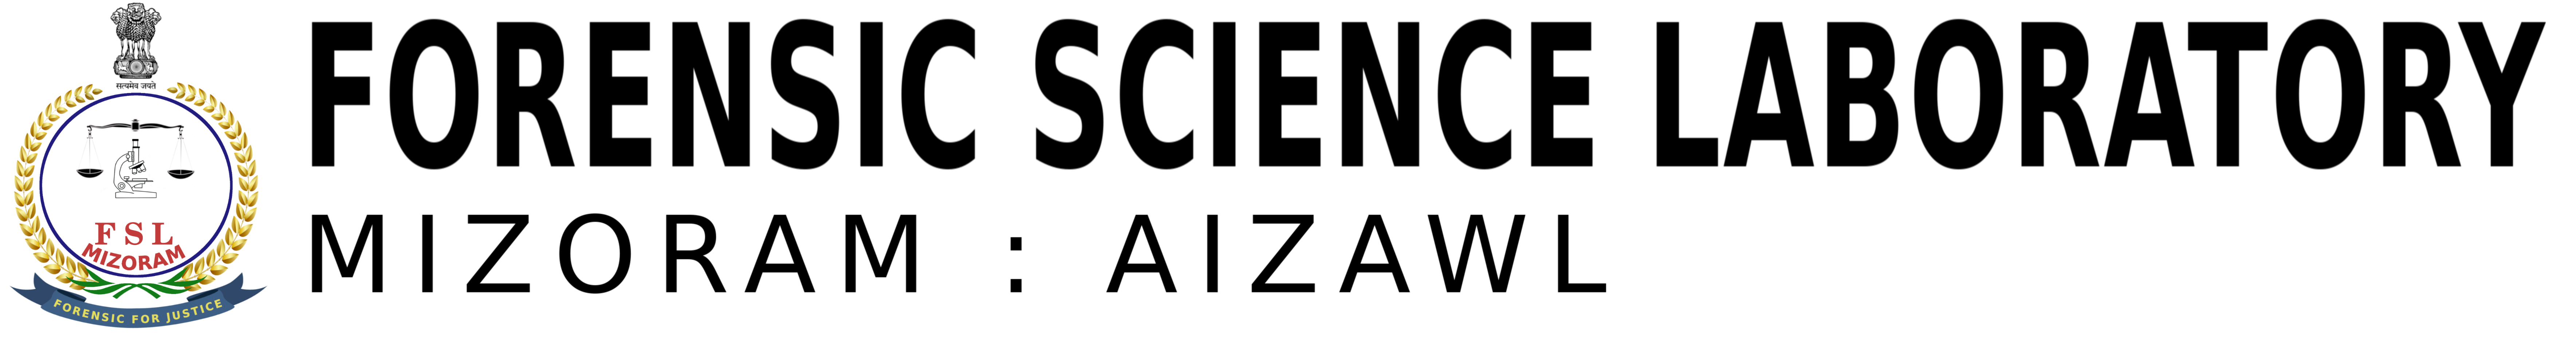 forensic logo